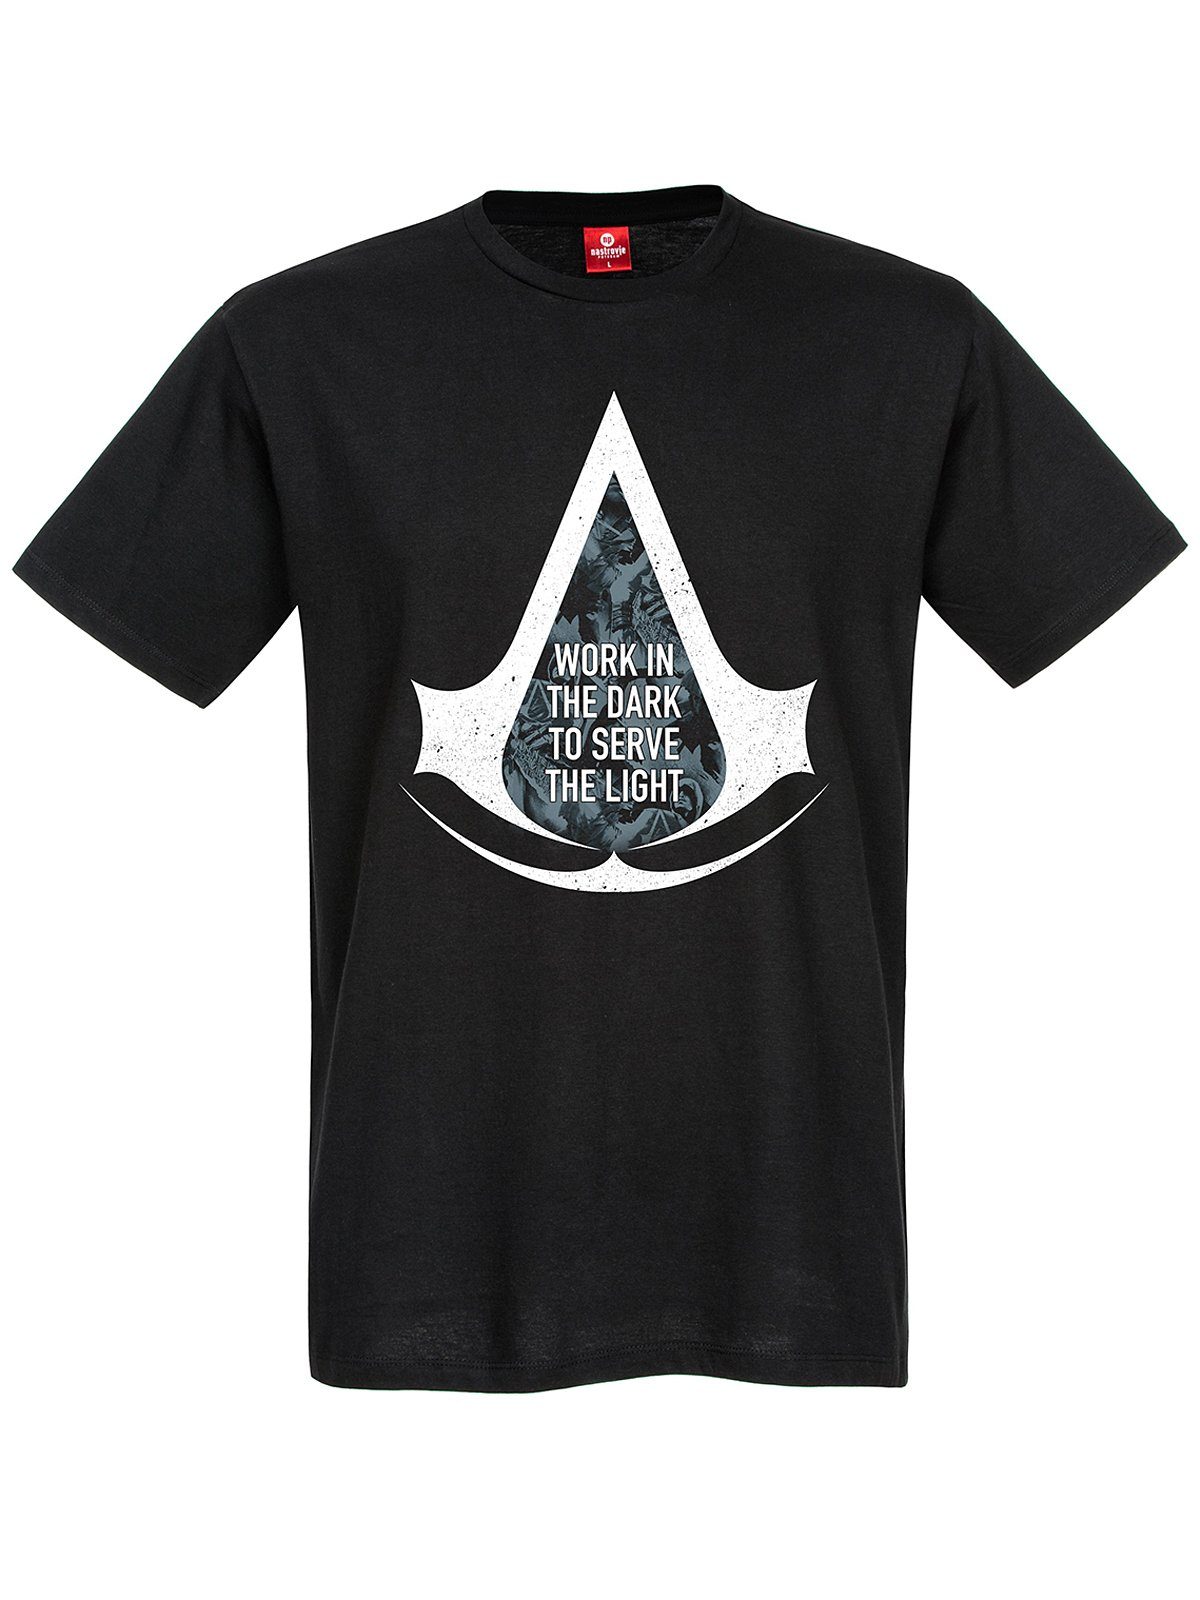 Nastrovje Potsdam T-Shirt Assassins Creed Work In The Dark